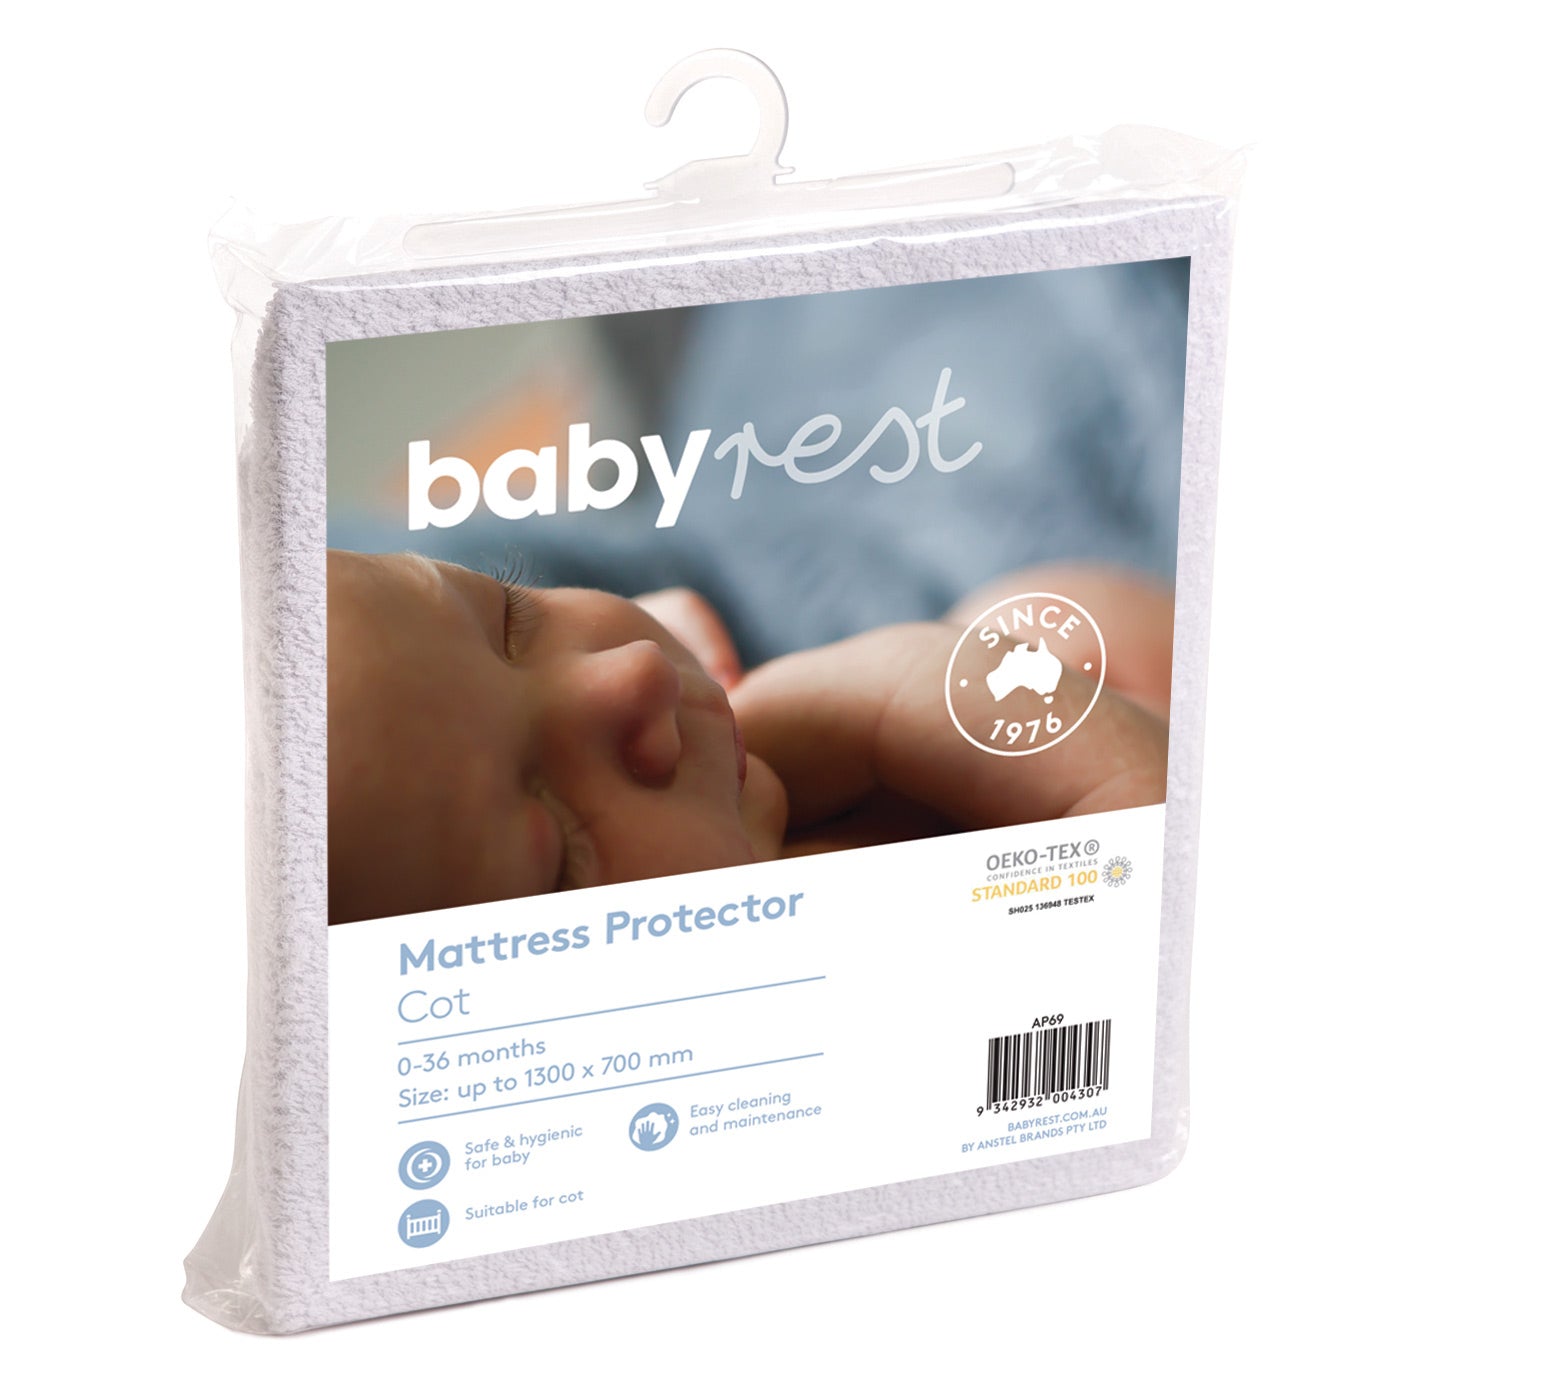 Babyrest Mattress Protector STD Cot 1300 x 700